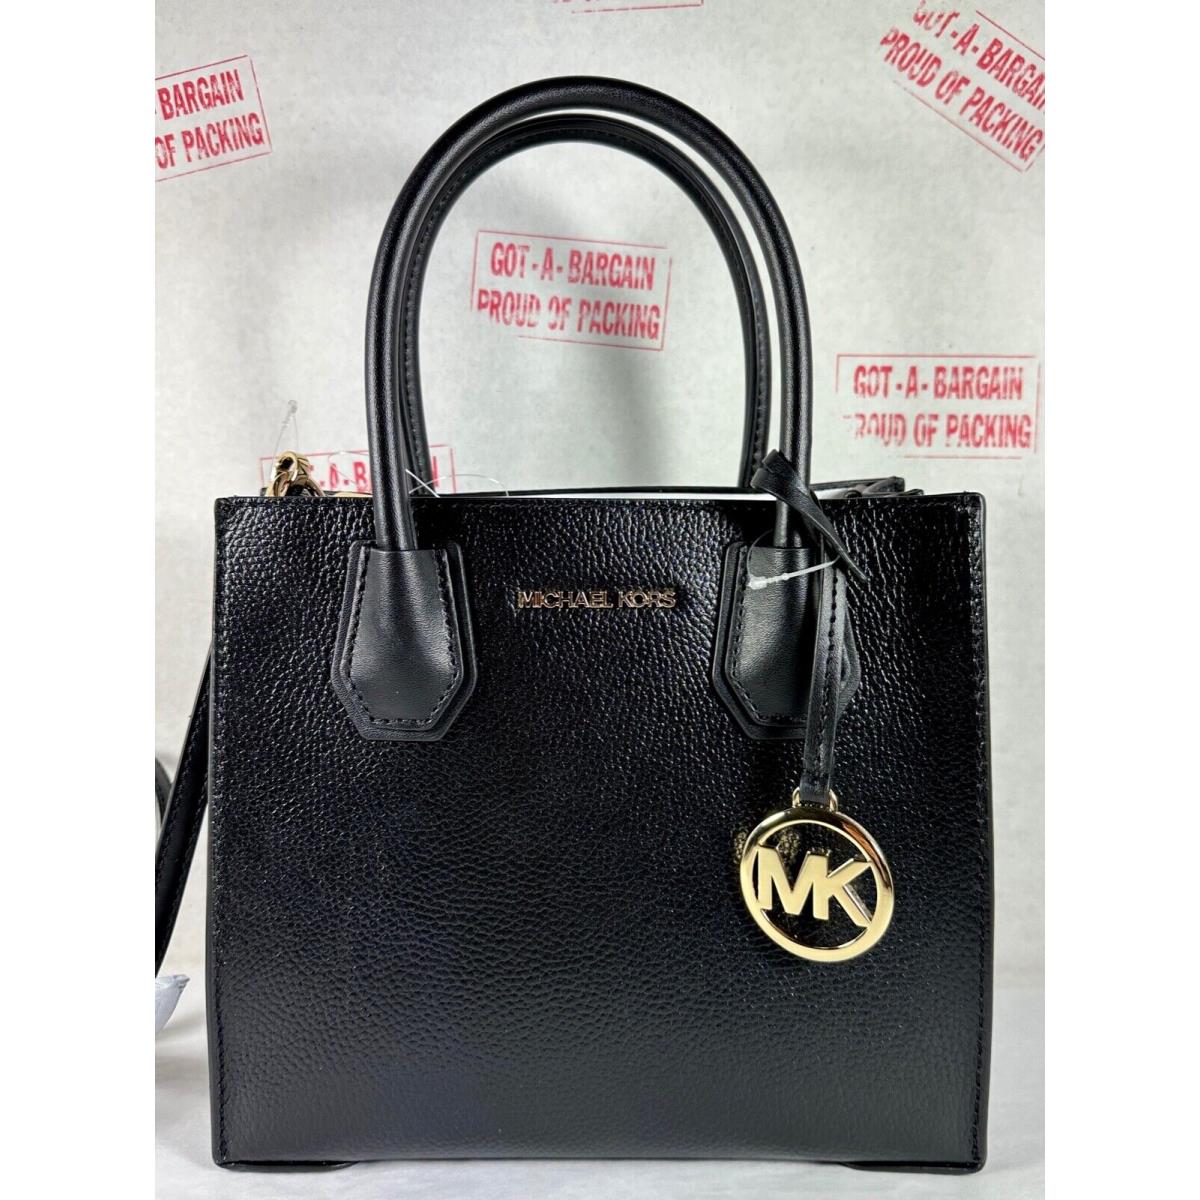 Michael Kors Mercer Medium Mk Signature Pvc Leather Satchel Crossbody Bag Purse Black Leather/GOLD